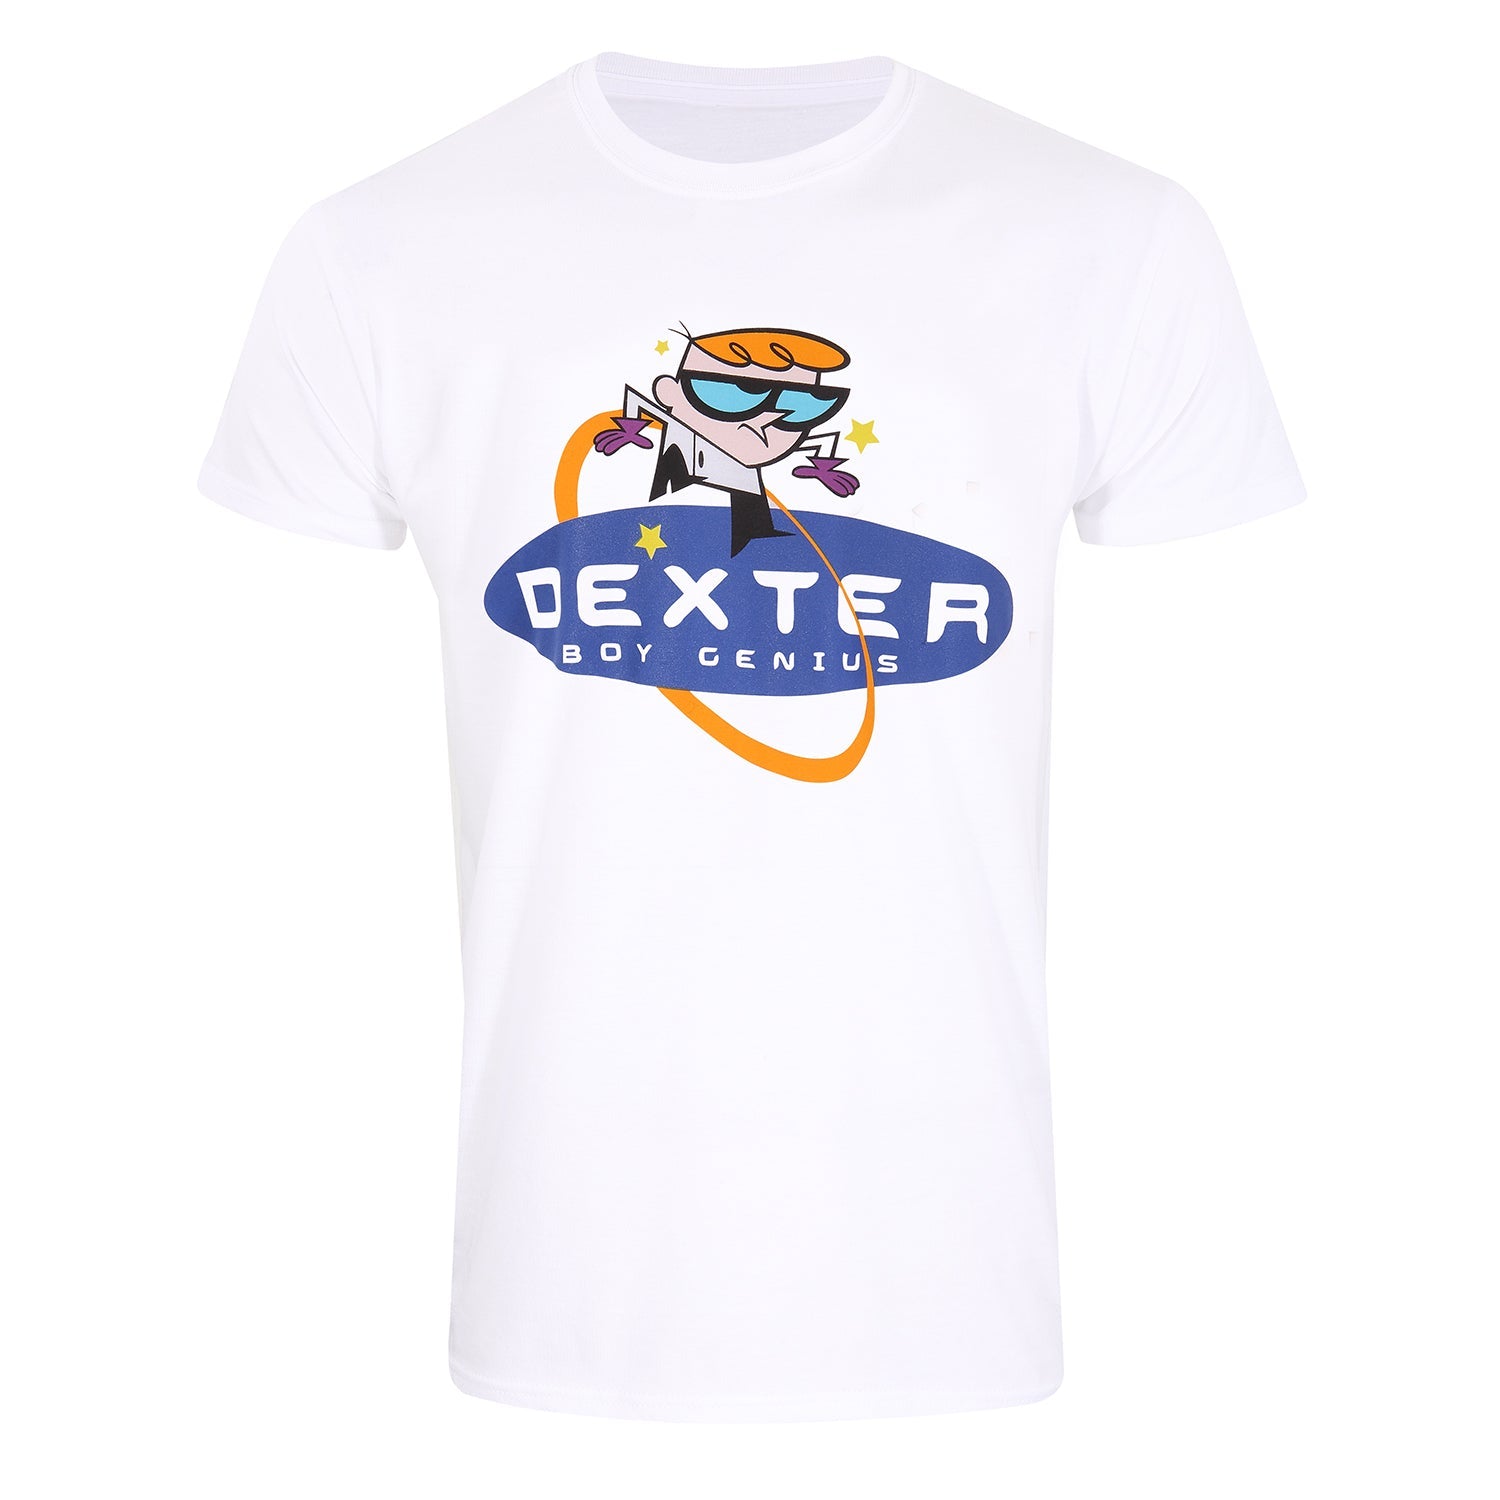 Dexters Laboratory Boy Genius T-Shirt